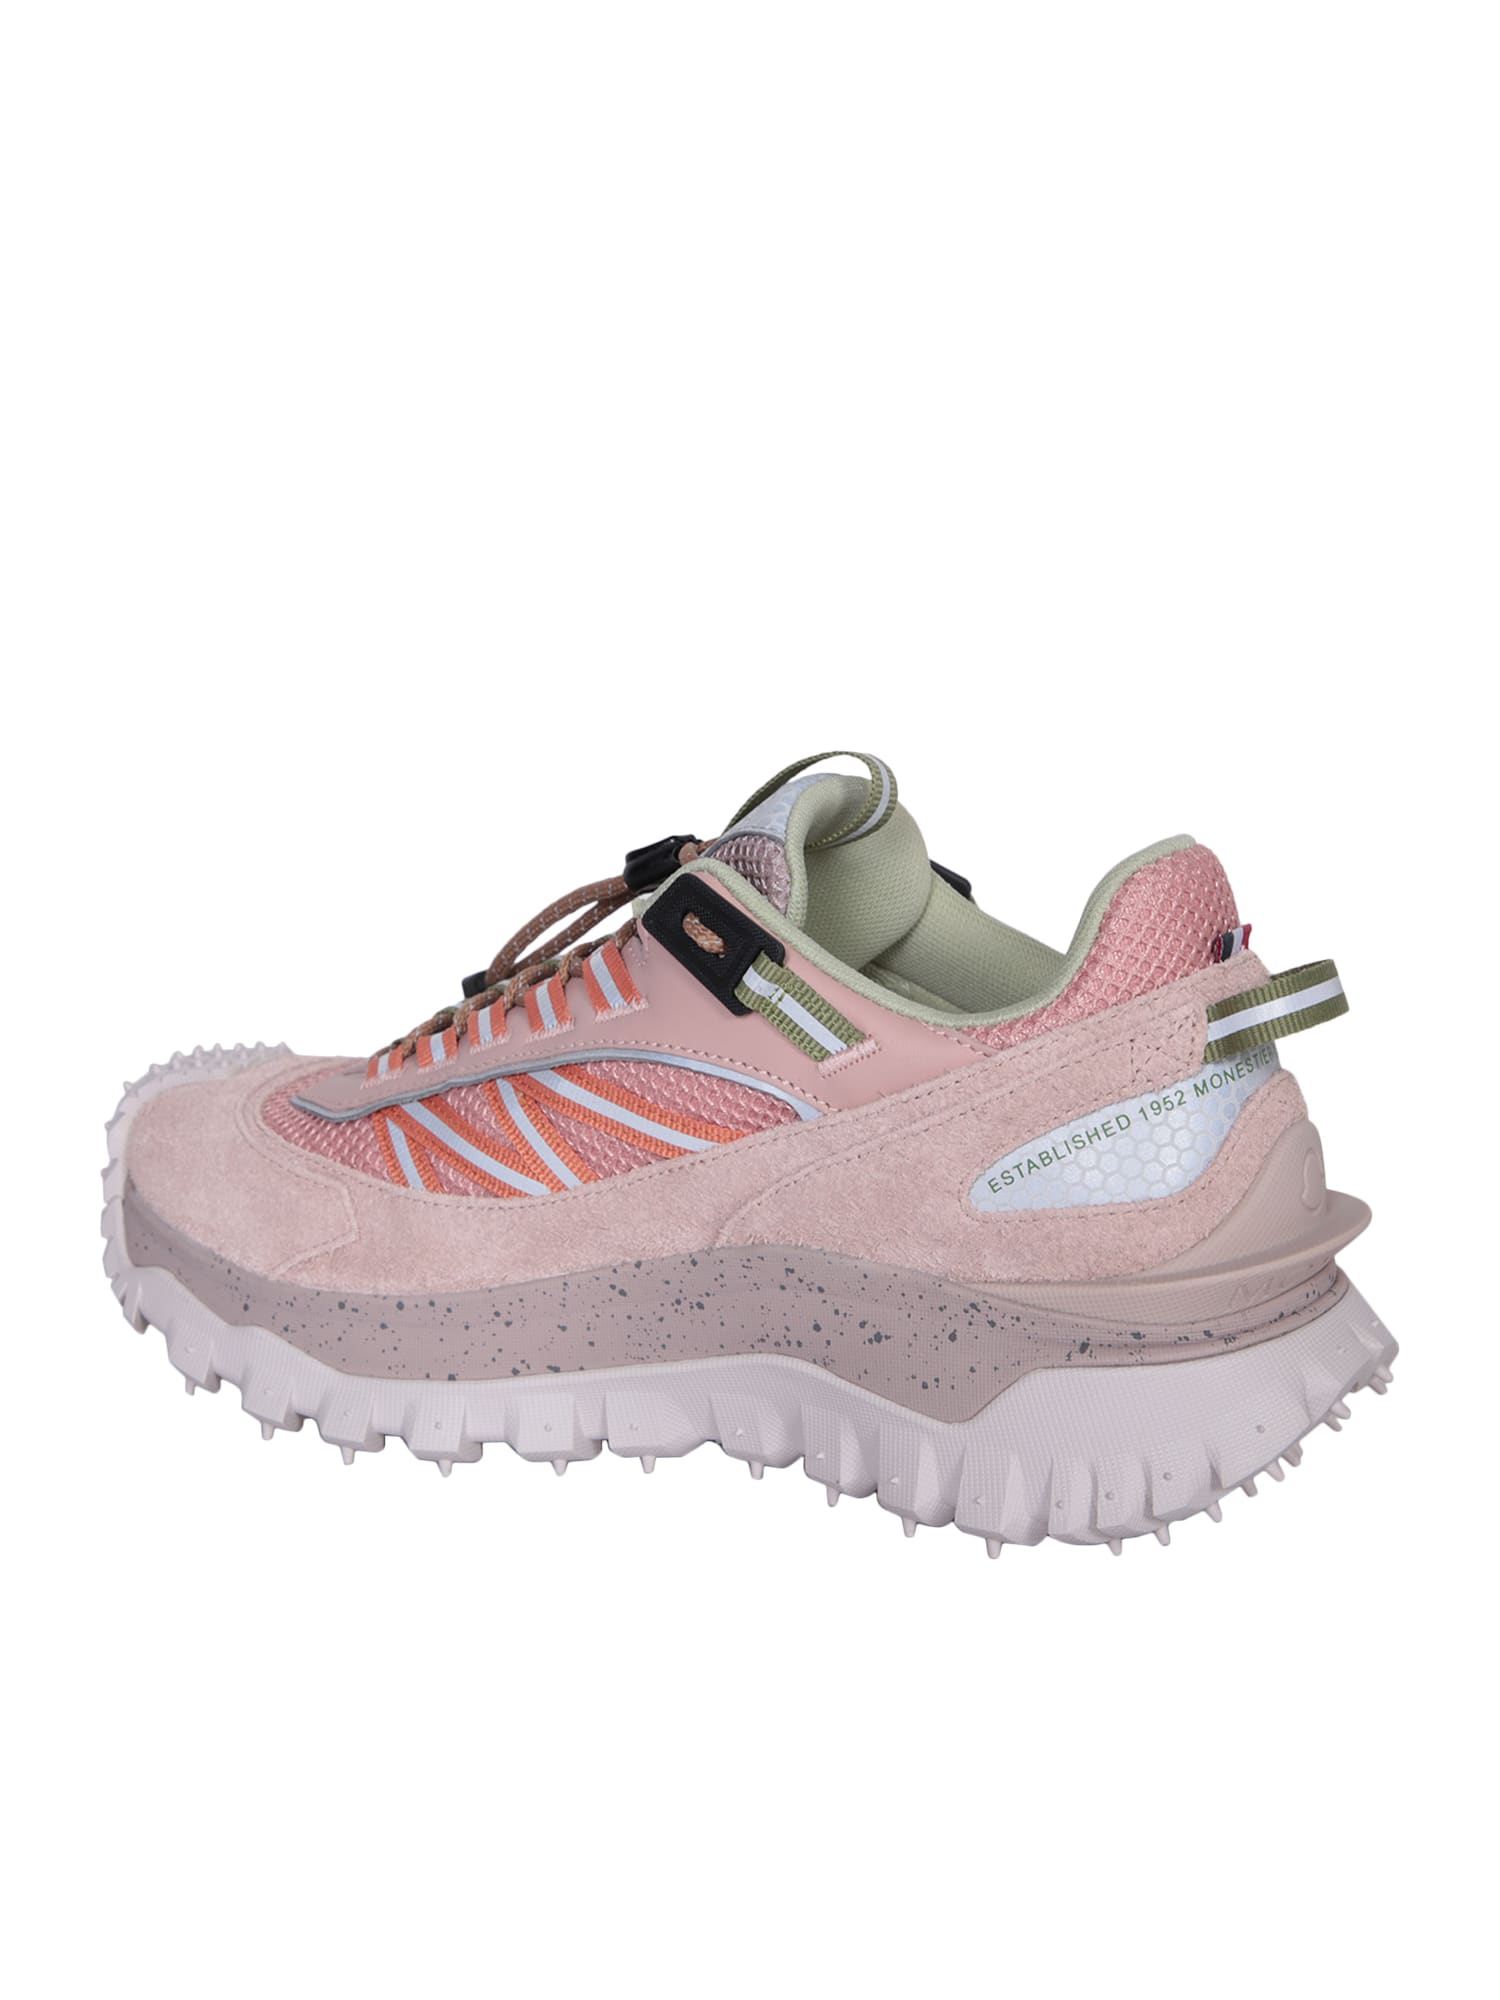 Shop Moncler Runner Trailgrip Pink Sneakers